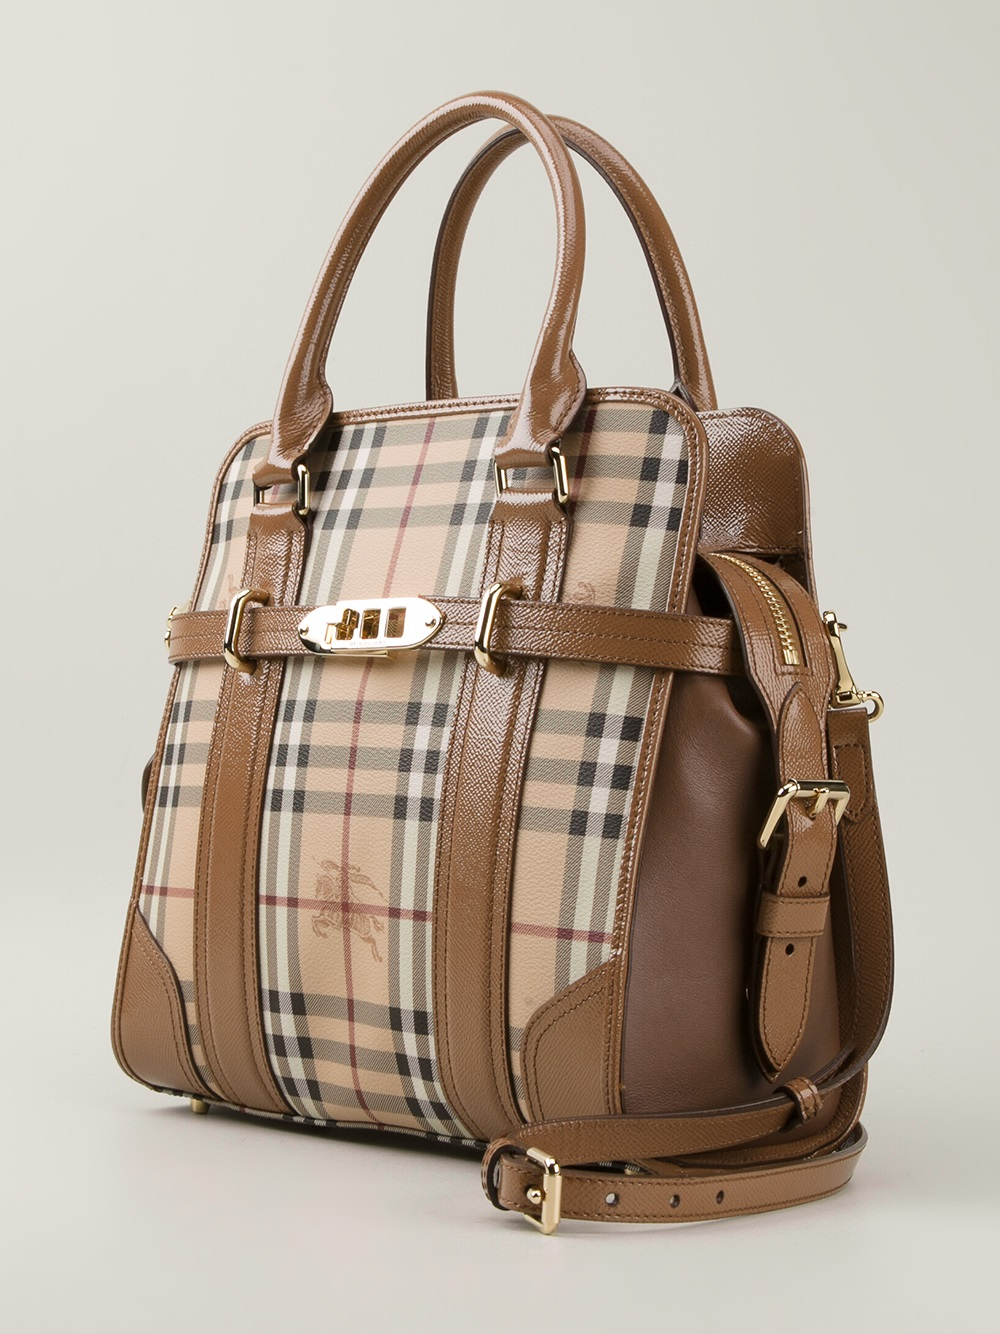 Burberry Burberry Check Handbag in Brown - Lyst